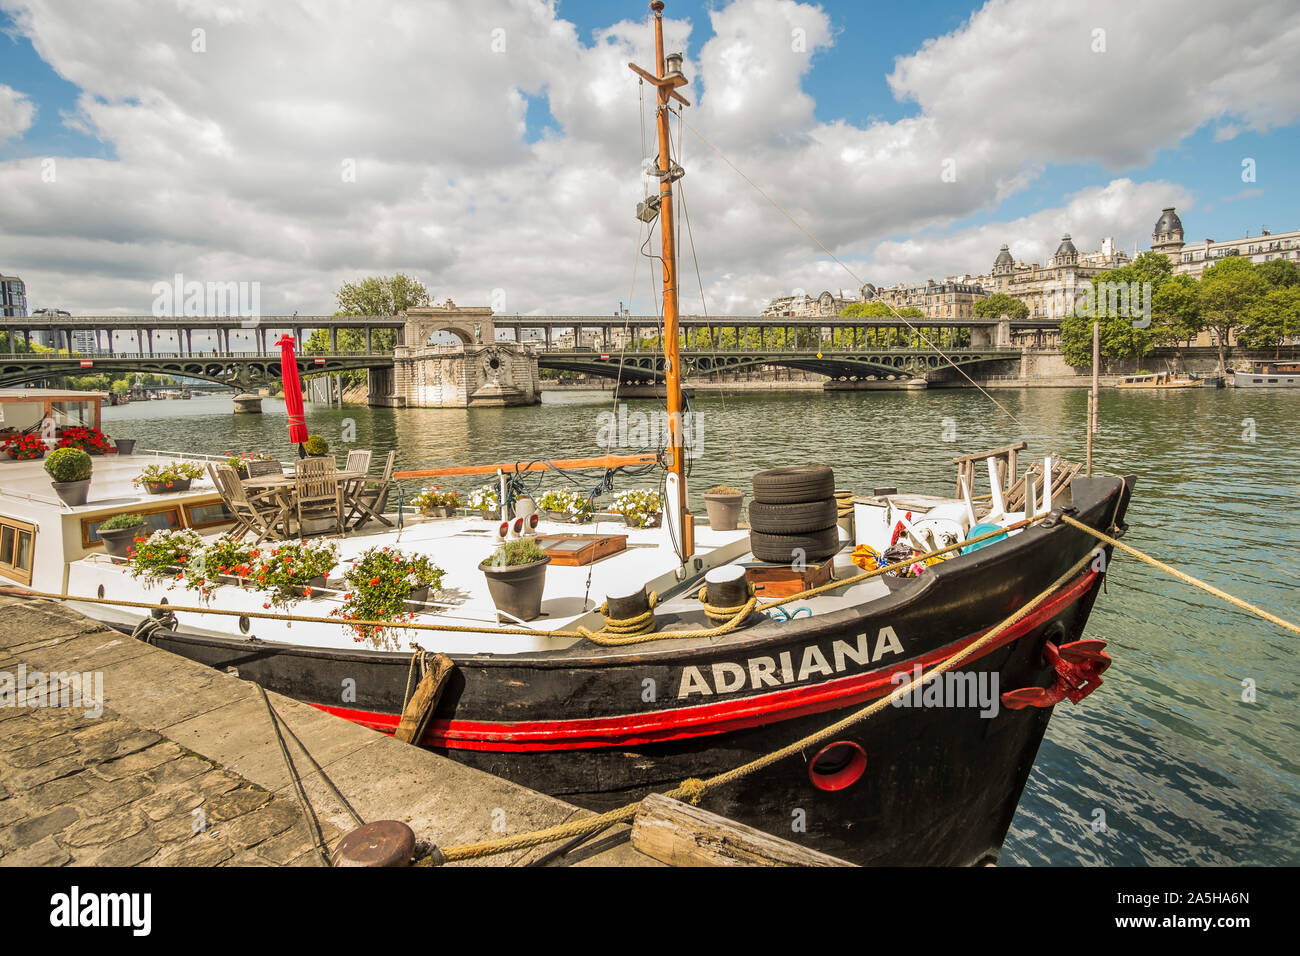 adriana, houseboat on river seine with bir-hakeim bridge in background Stock Photo